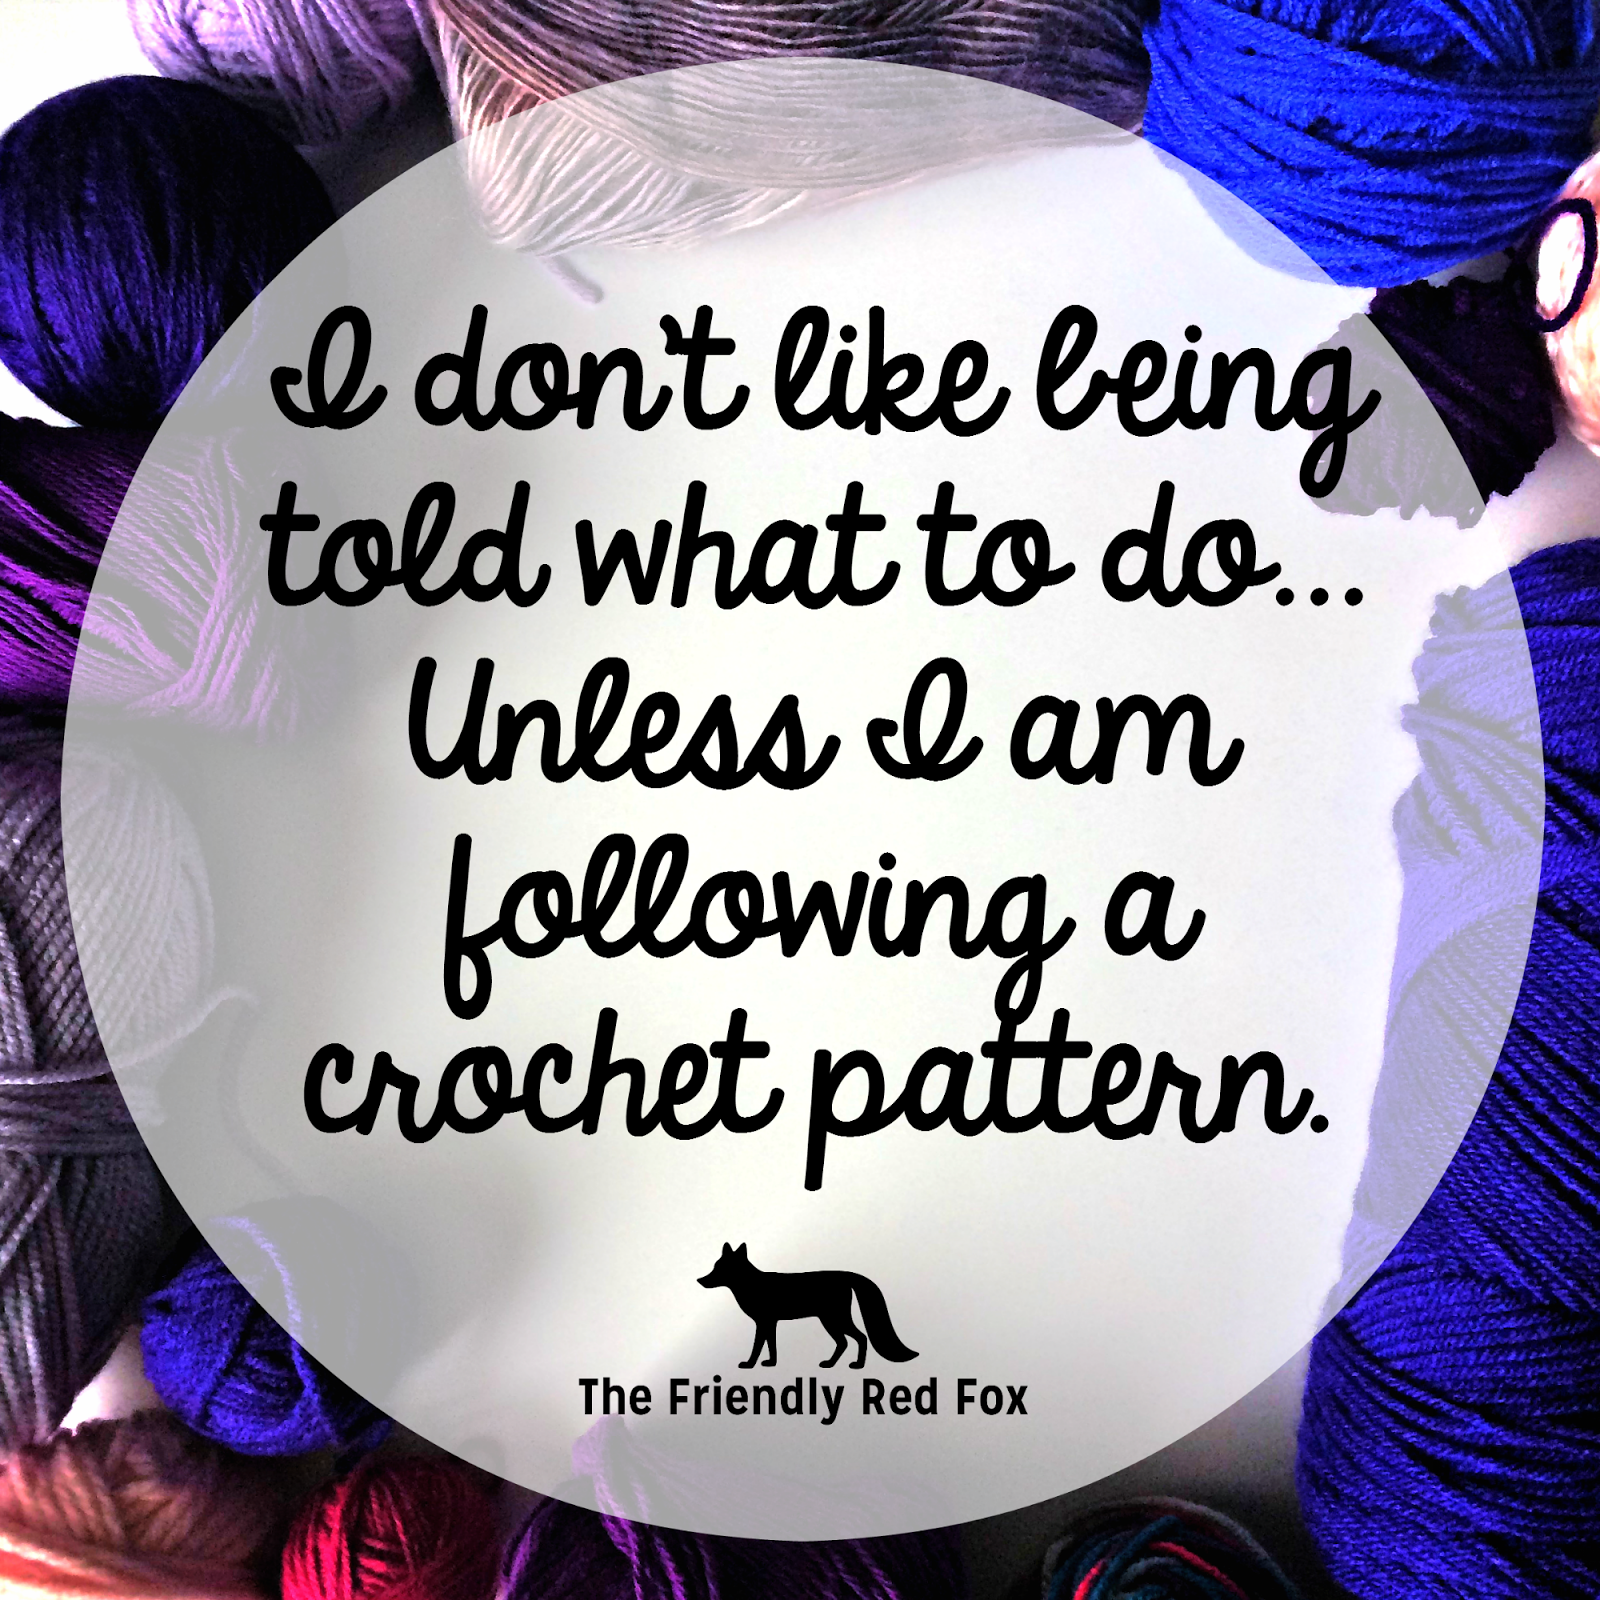 Funny Crochet Memes - thefriendlyredfox.com